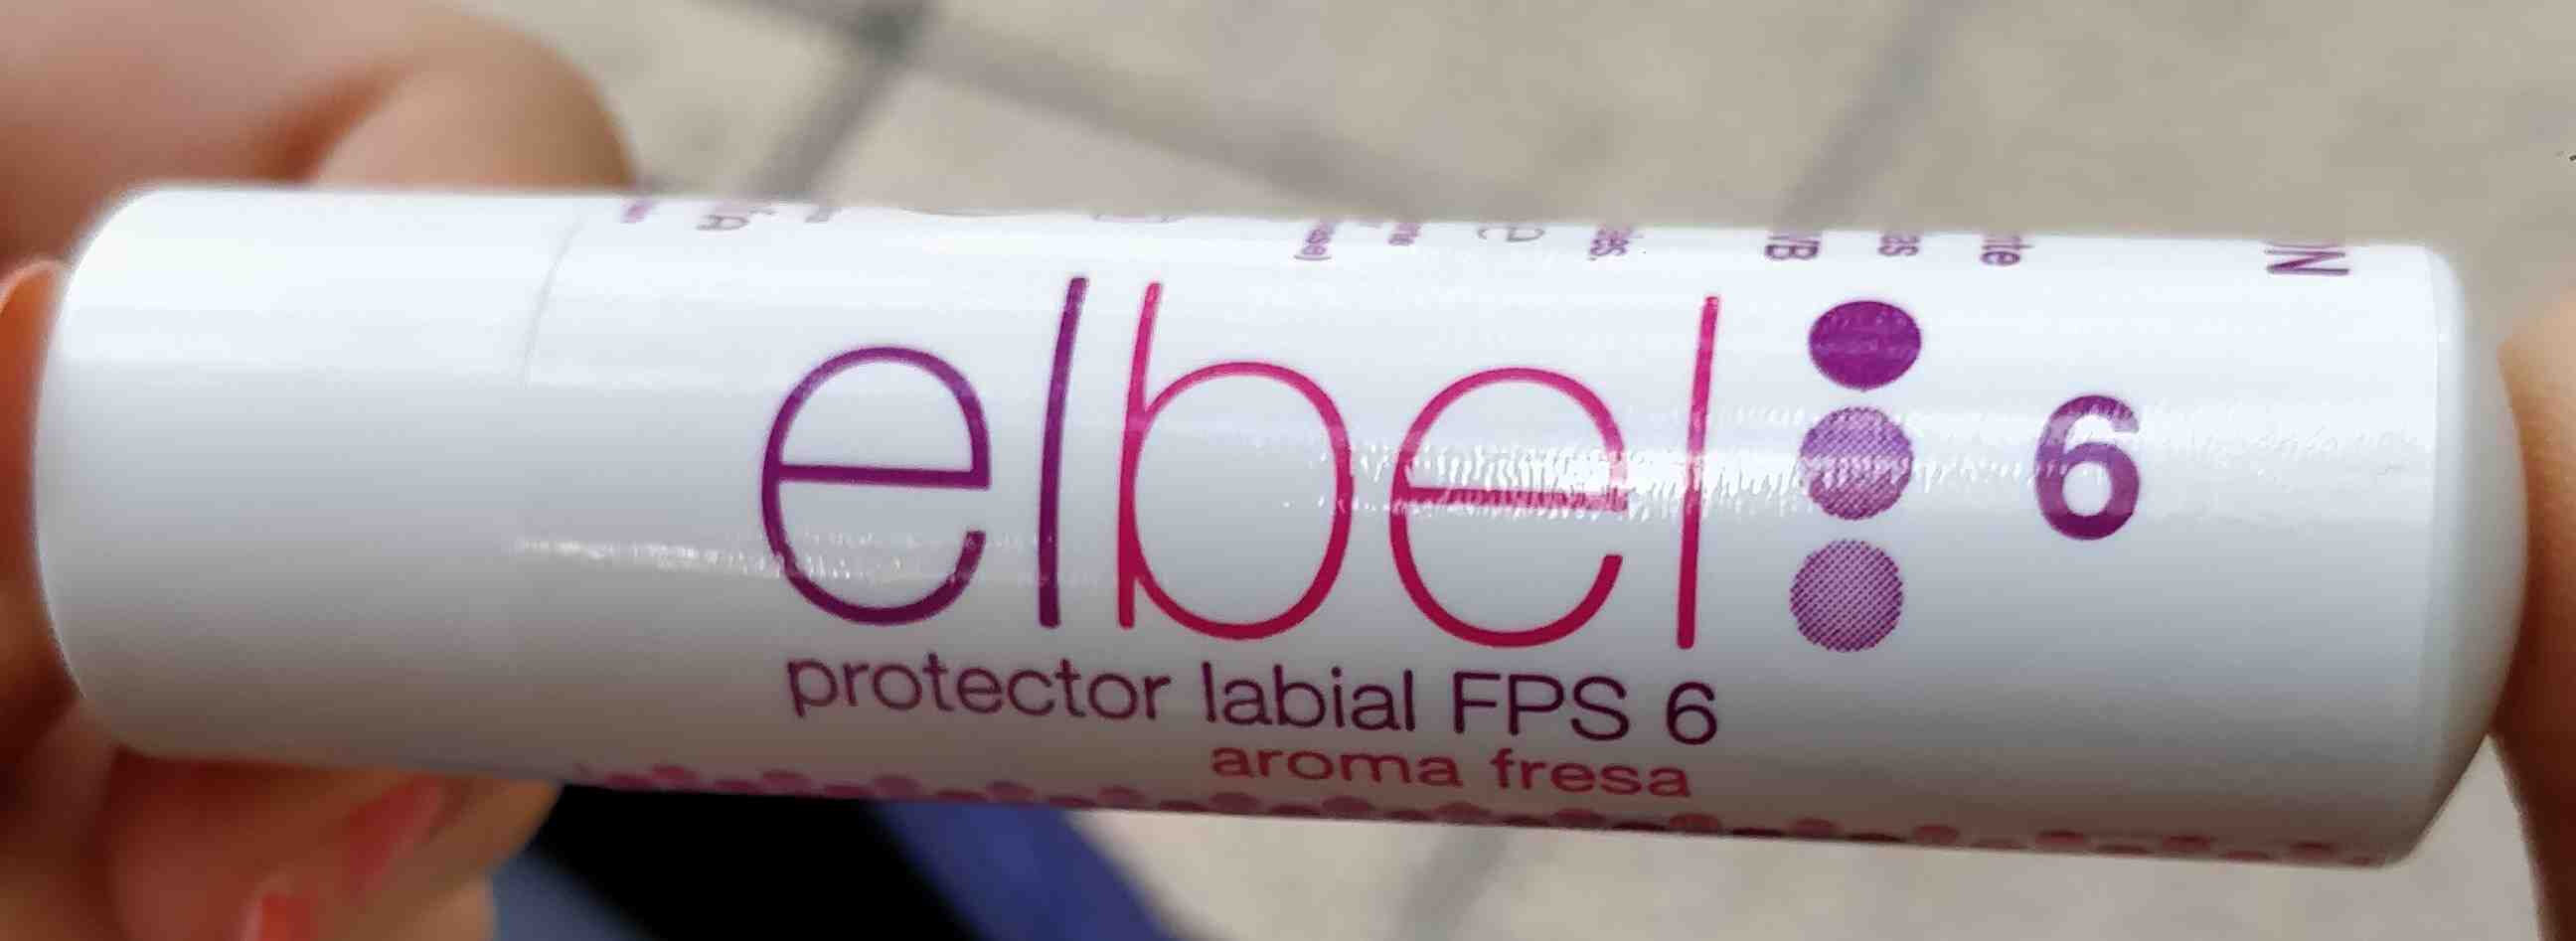 Protector labial FPS 6 aroma fresa - Product - en